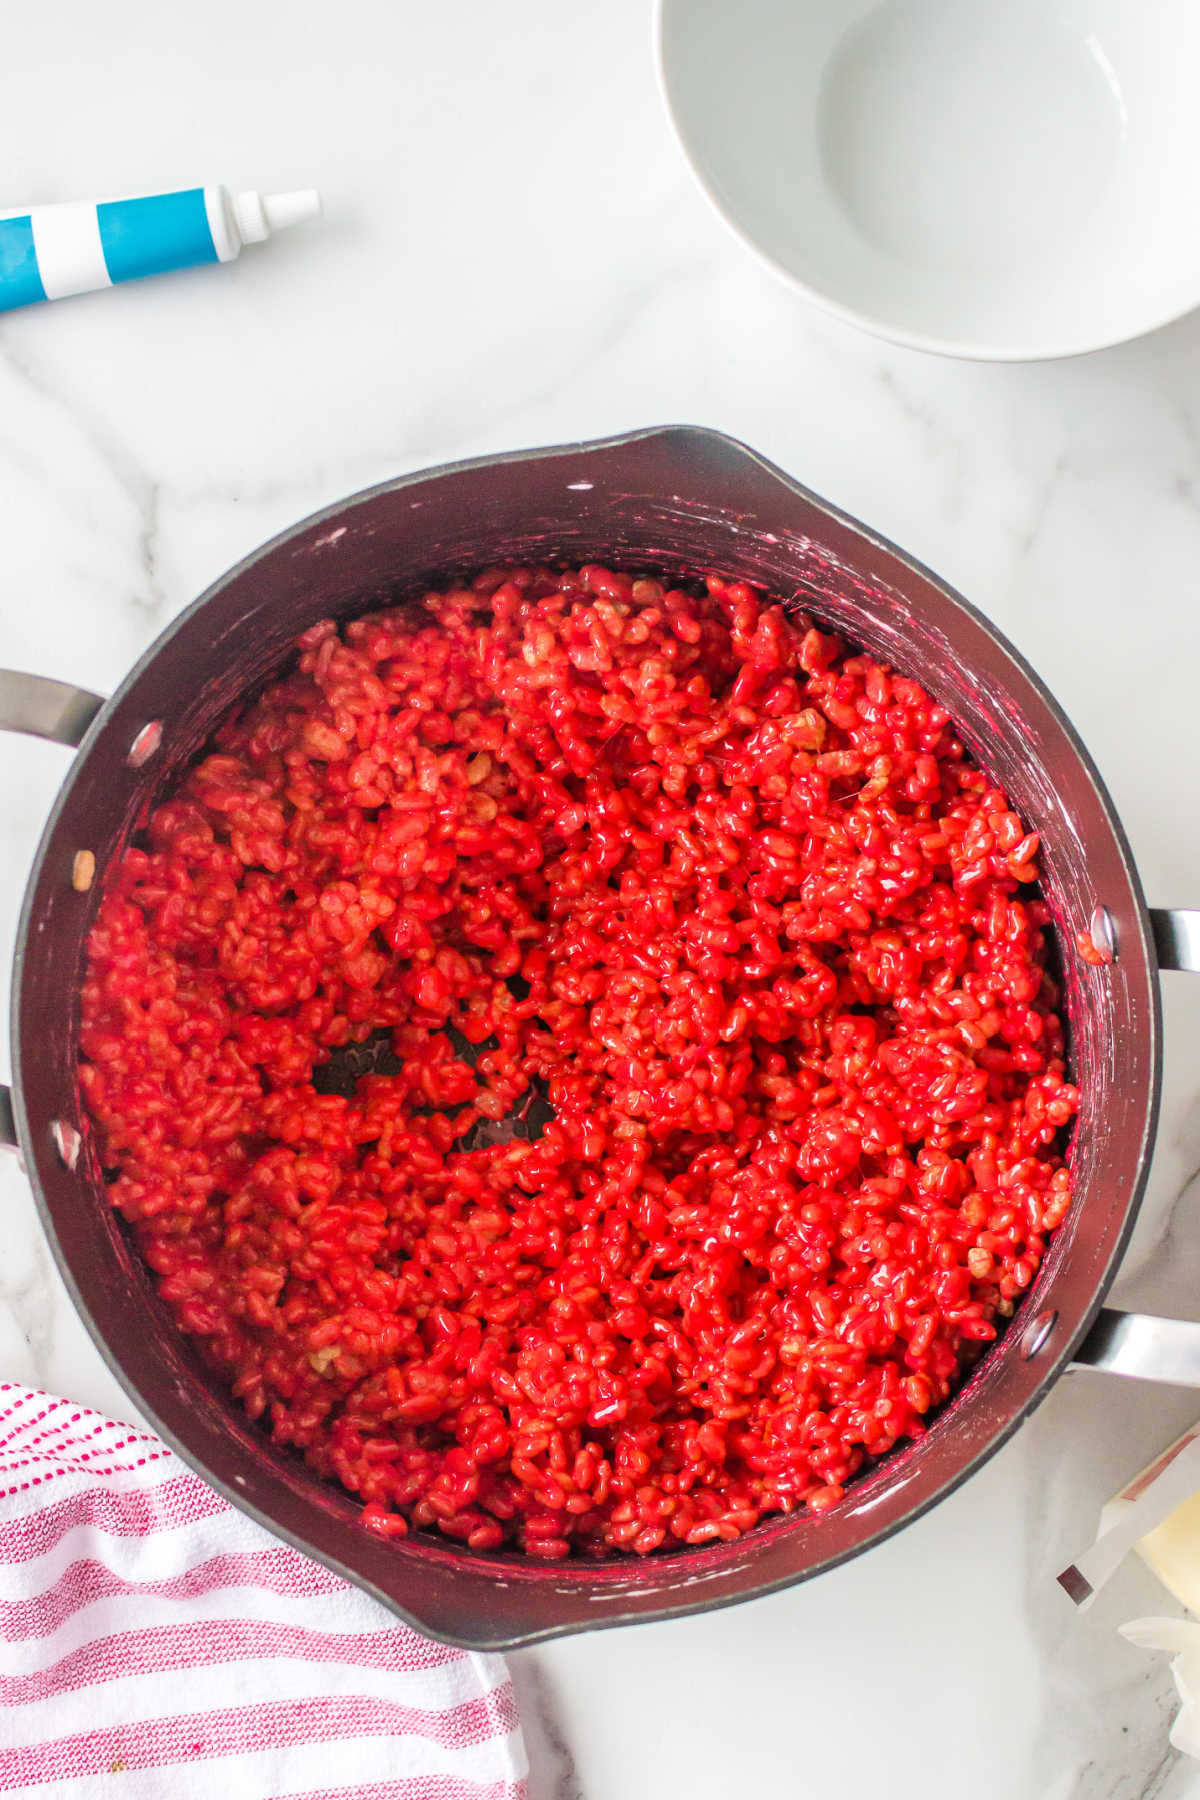 Red rice krispies in a large saucepan.